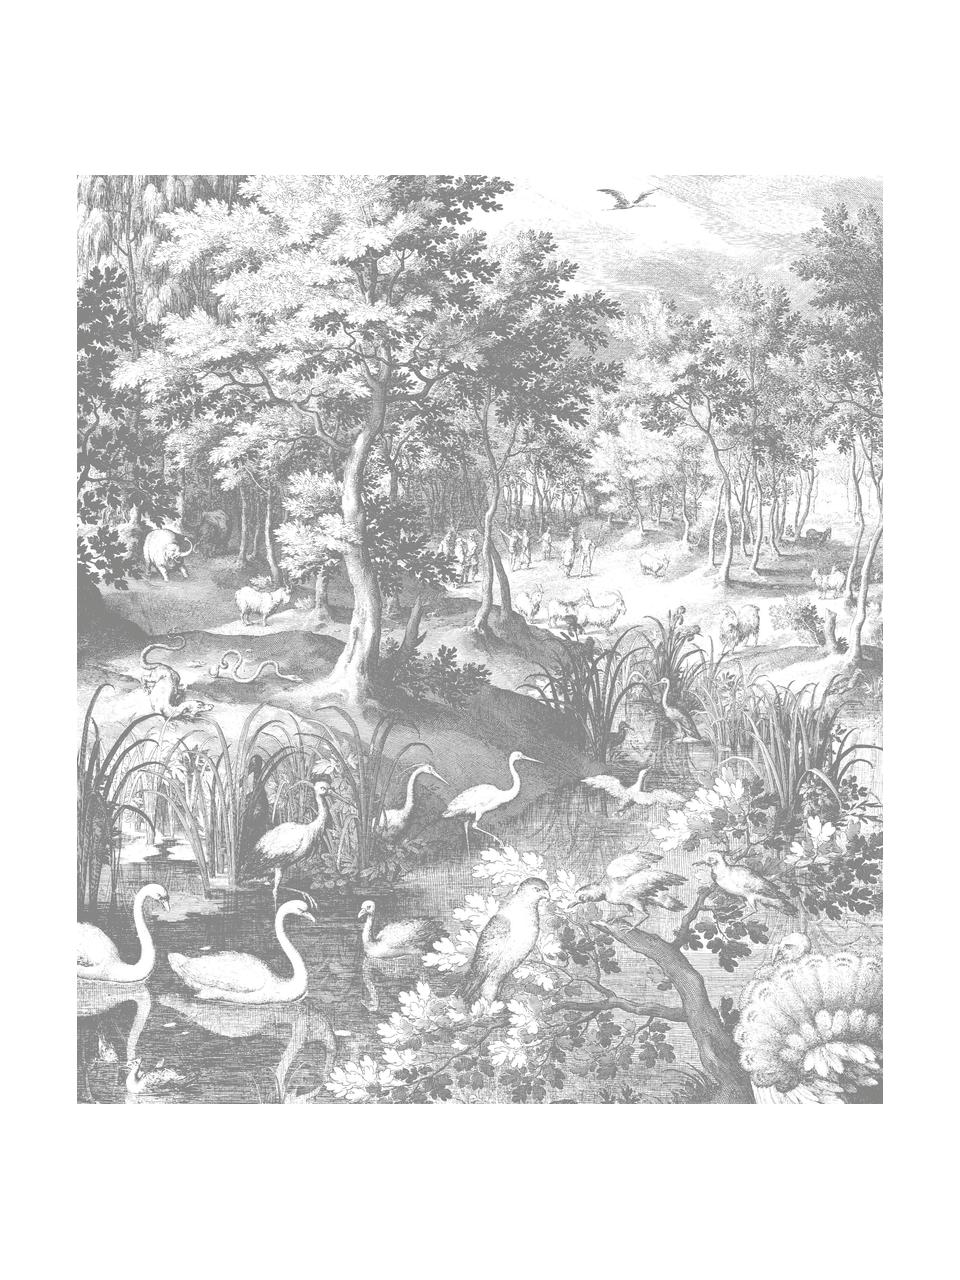 Fototapete Landscapes mit Wald-Motiv, Vlies, Weiß, Grau, B 190 x H 220 cm